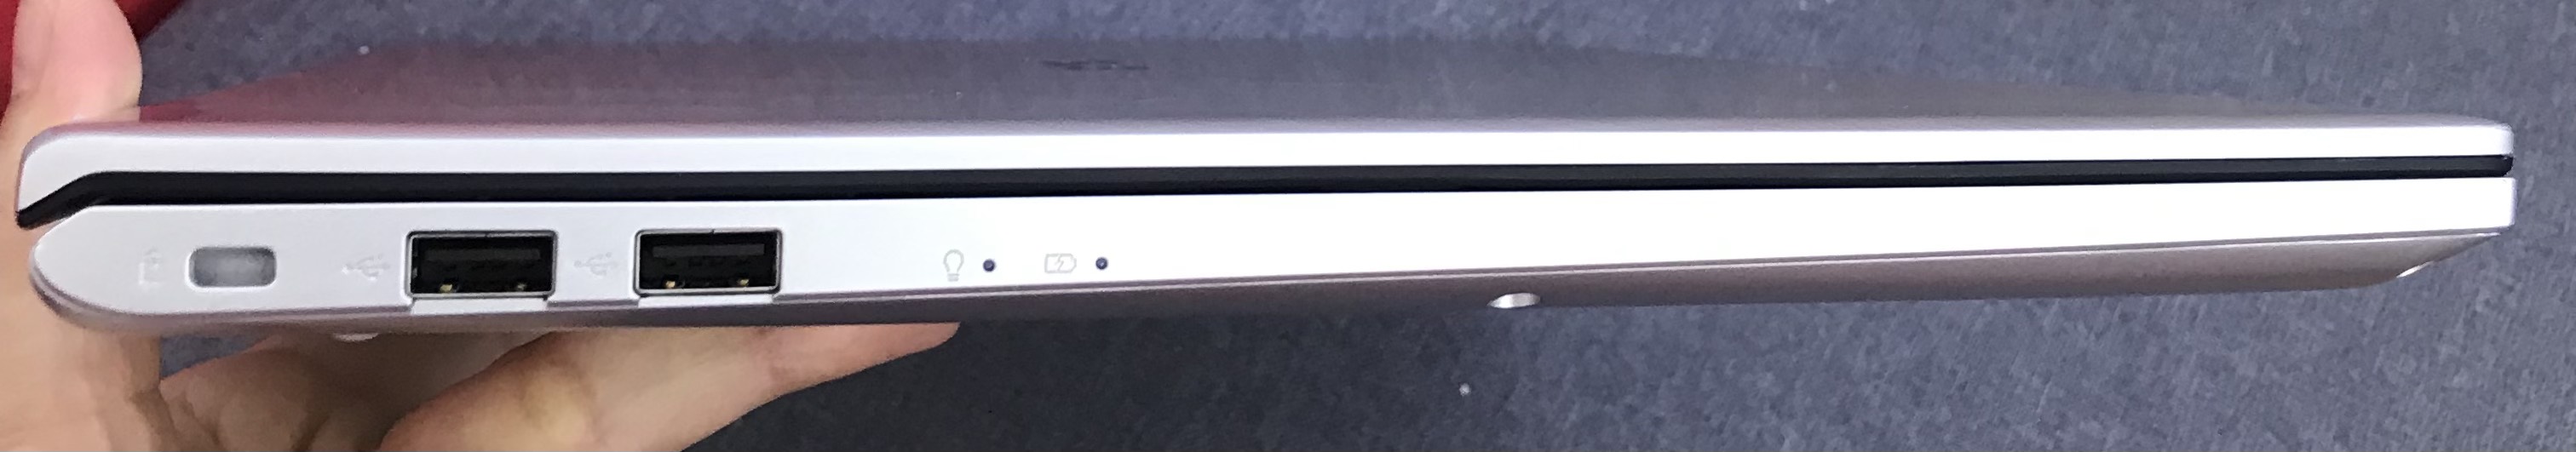 (Mới 100%) Asus VivoBook 17 K712E full box 17.3inch mỏng nhẹ